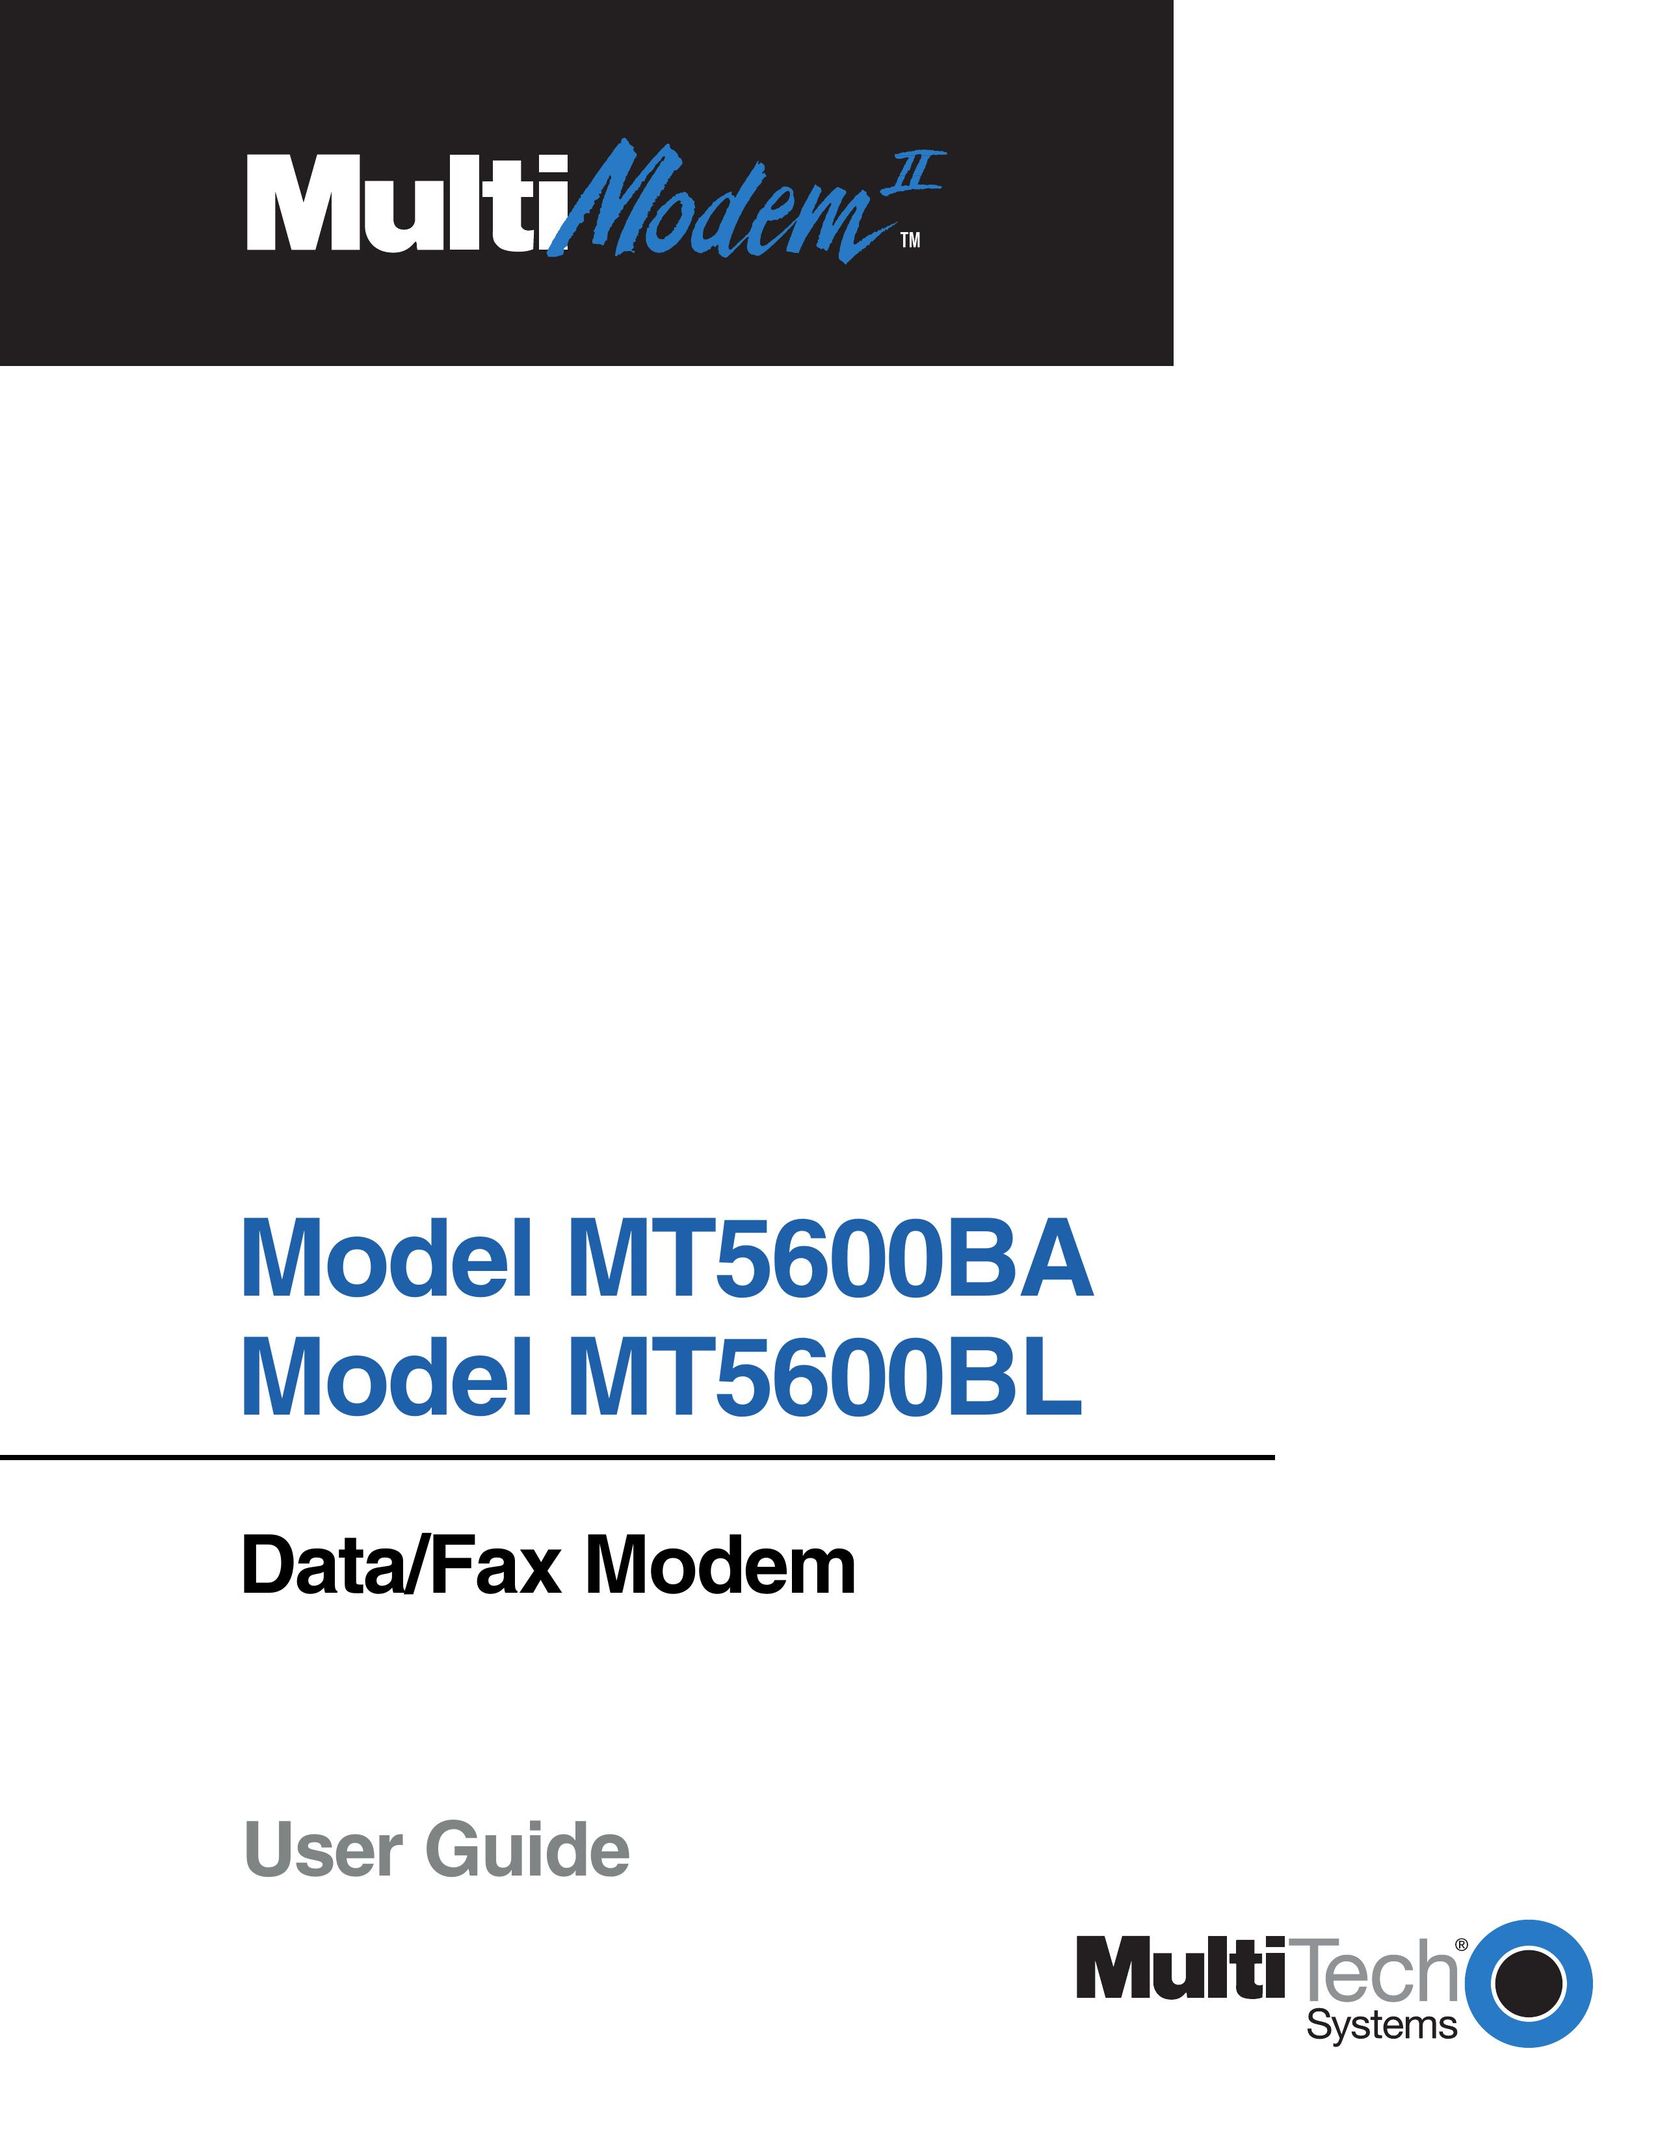 Multi-Tech Systems MT5600BA Modem User Manual